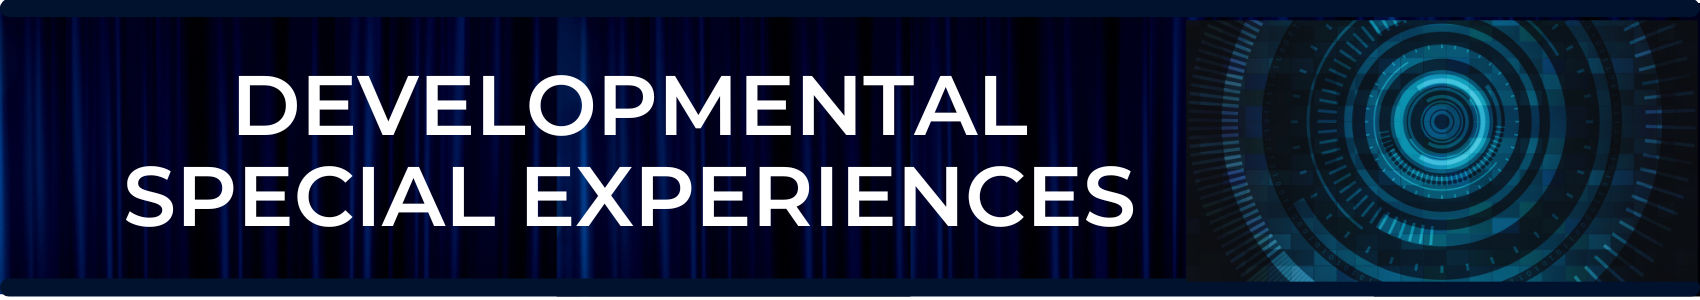 Developmental Special Experiences Banner